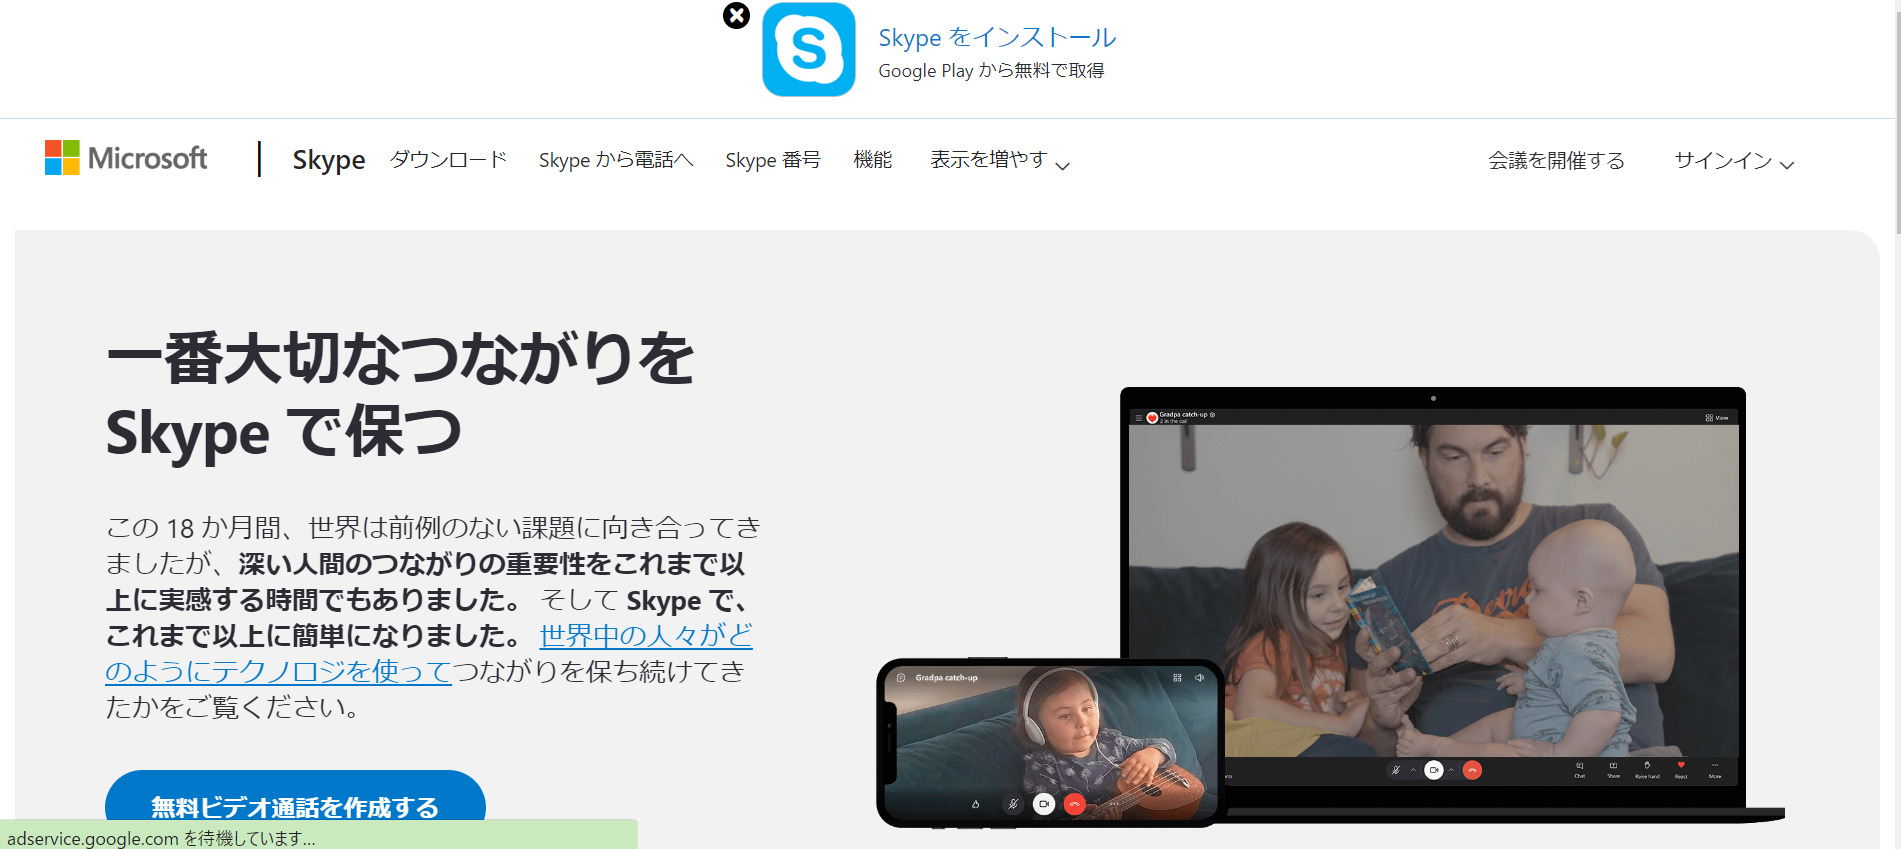 3.Skype